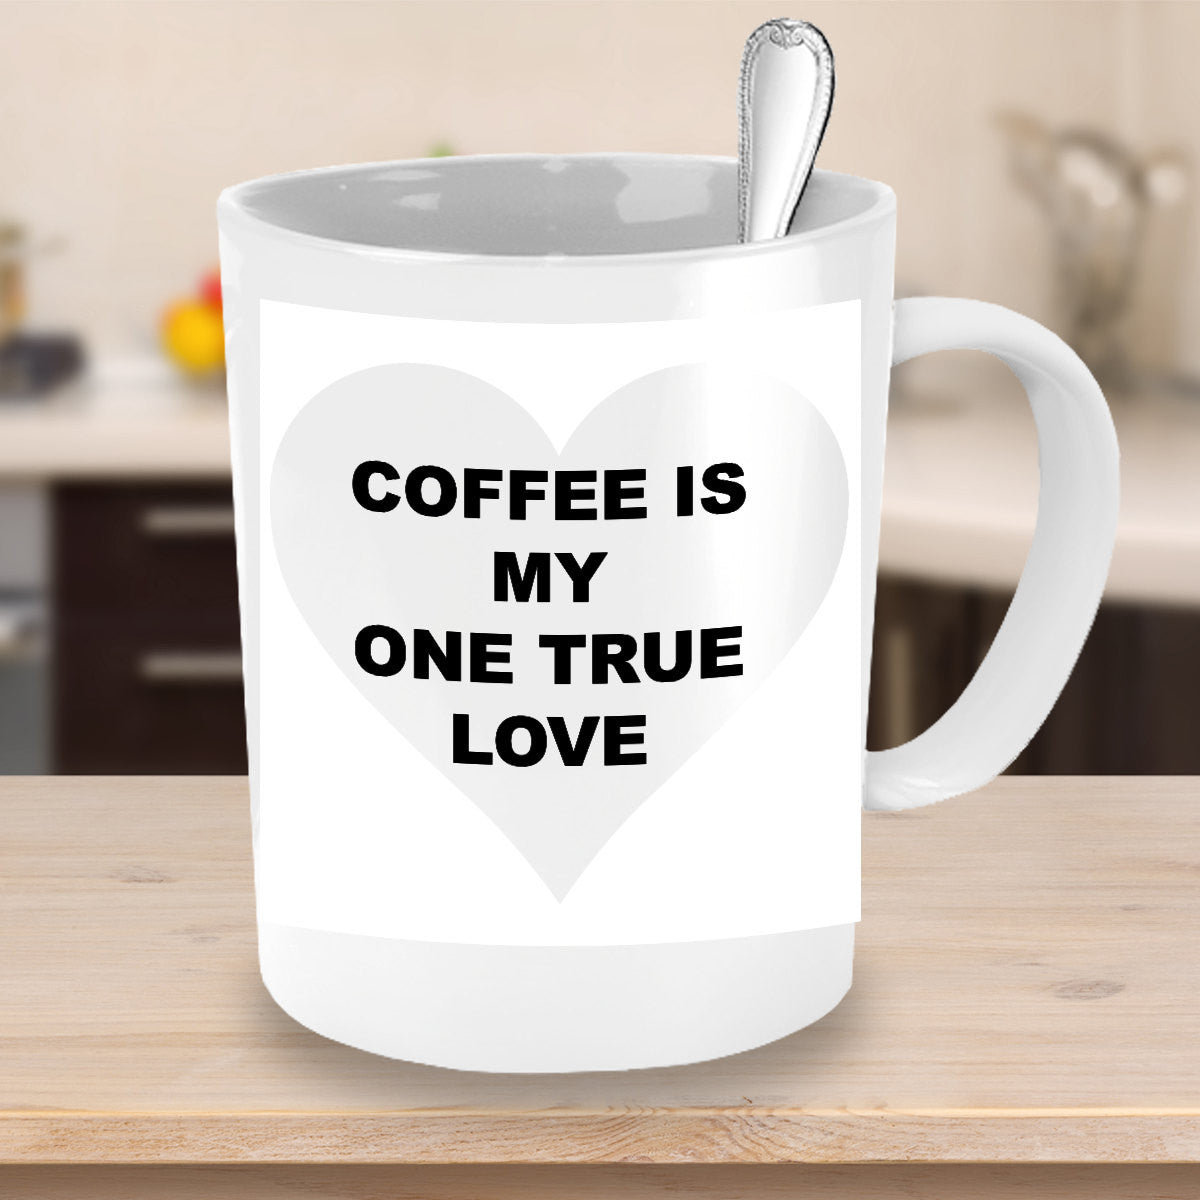 Funny Mug-Coffee Is My One True Love- Novelty Coffee Mug Gift White Ceramic Cup